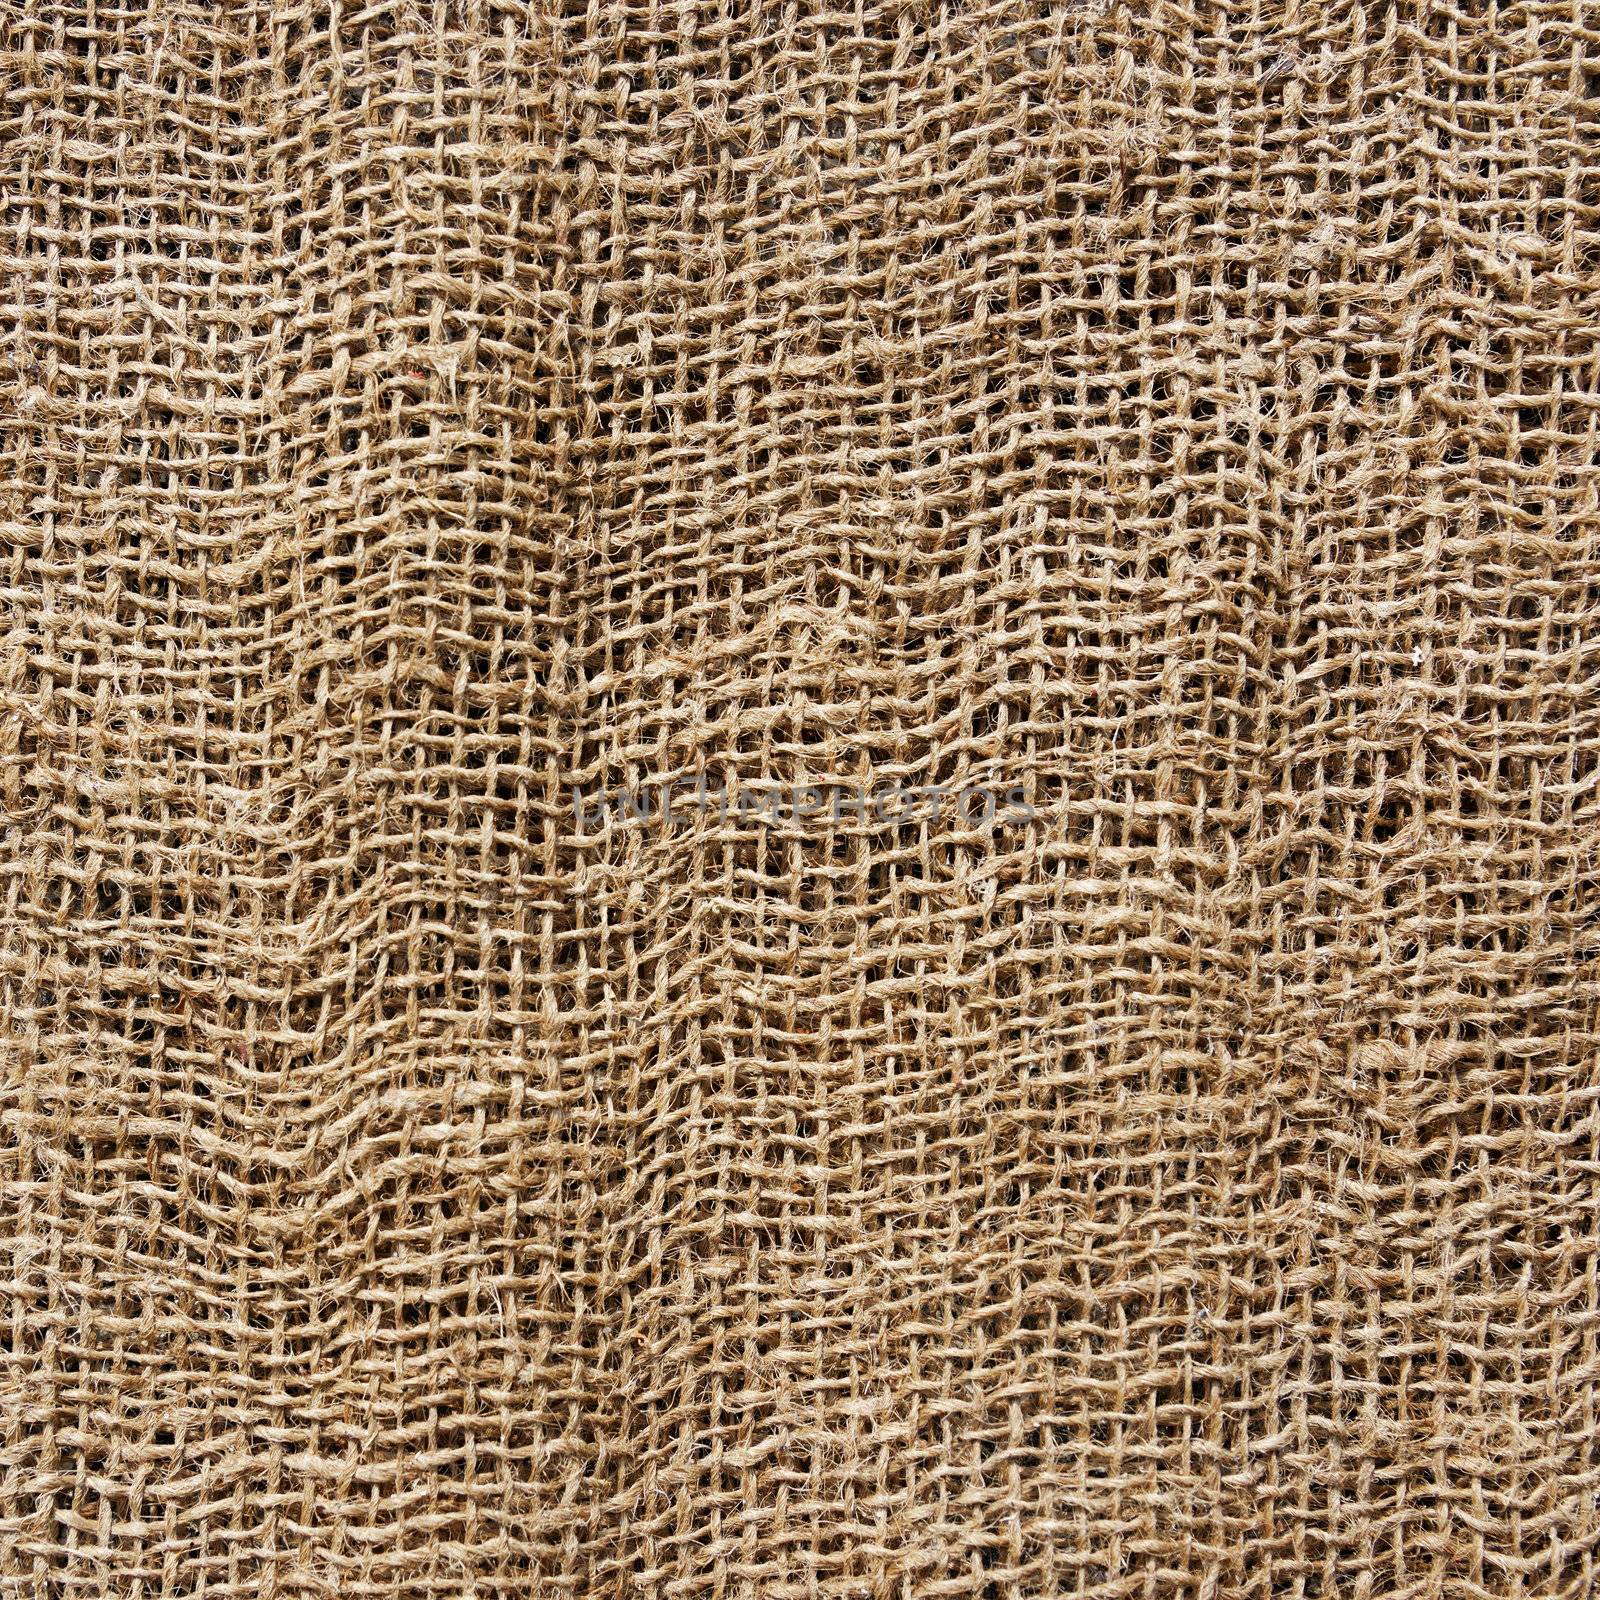 Hessian texture, square photograph